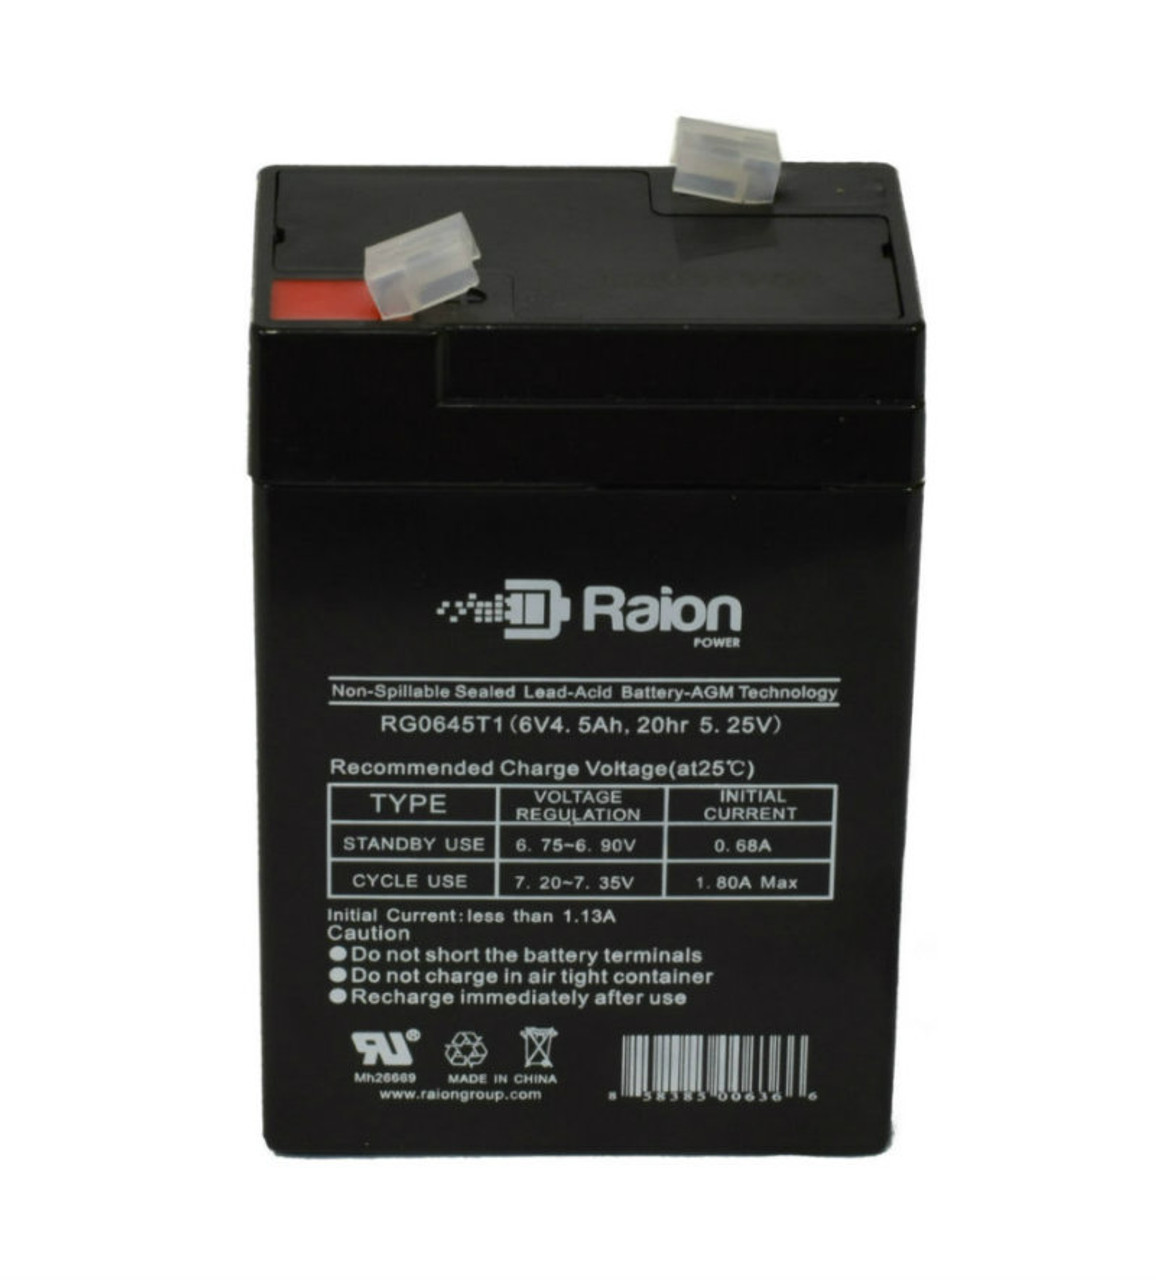 Raion Power RG0645T1 Replacement Battery Cartridge for Emergi-Lite LL6